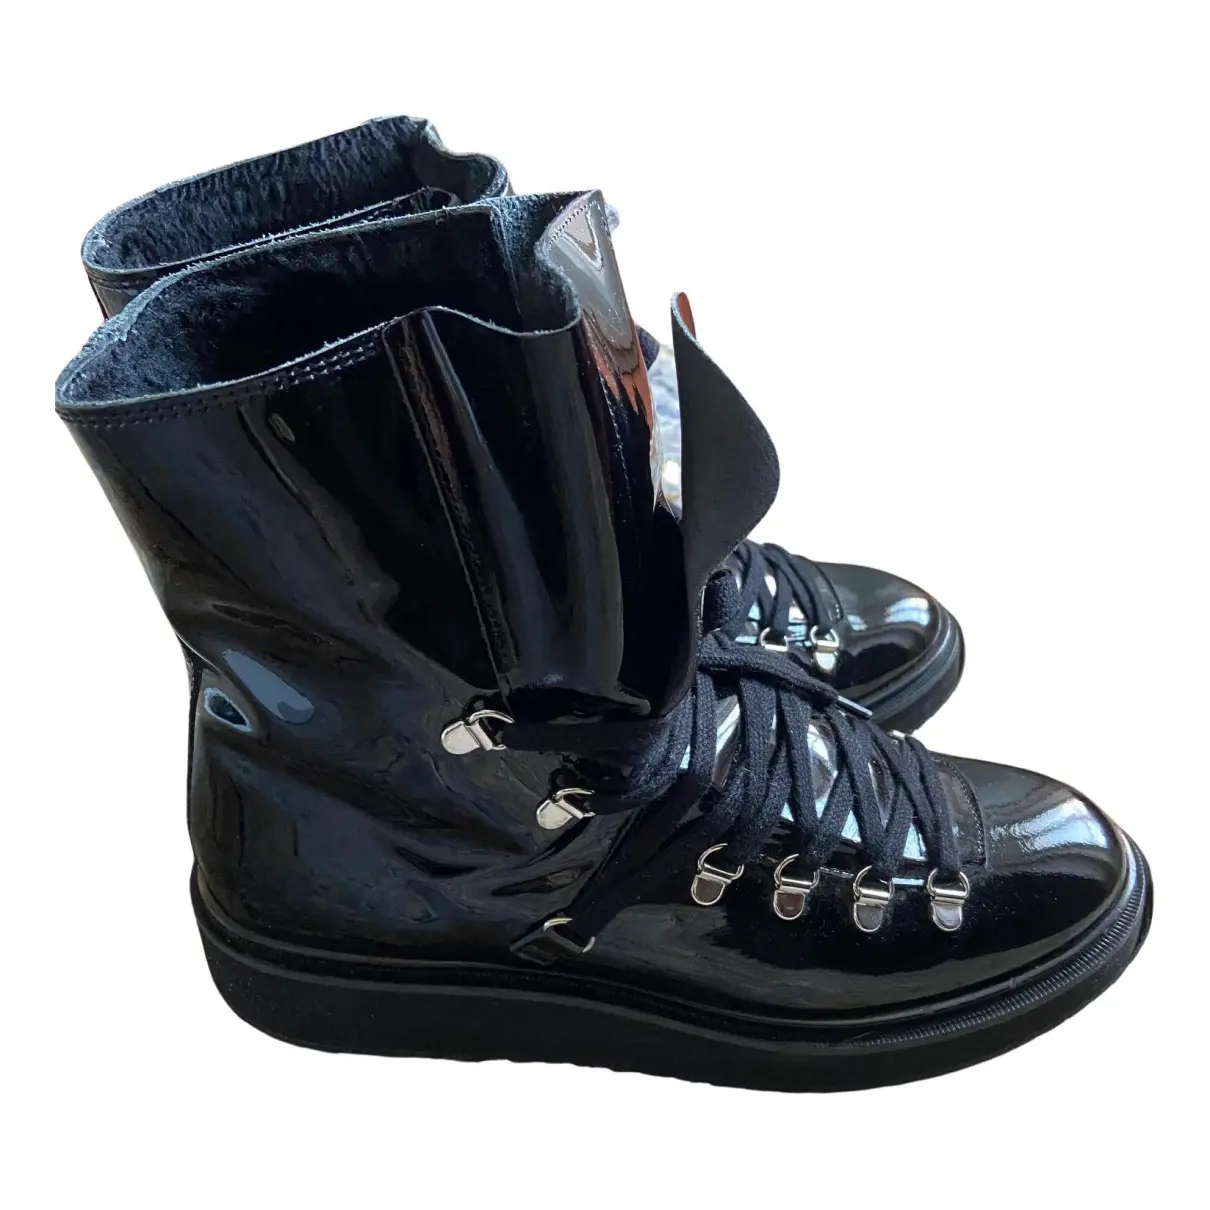 Patent leather biker boots Kenzo